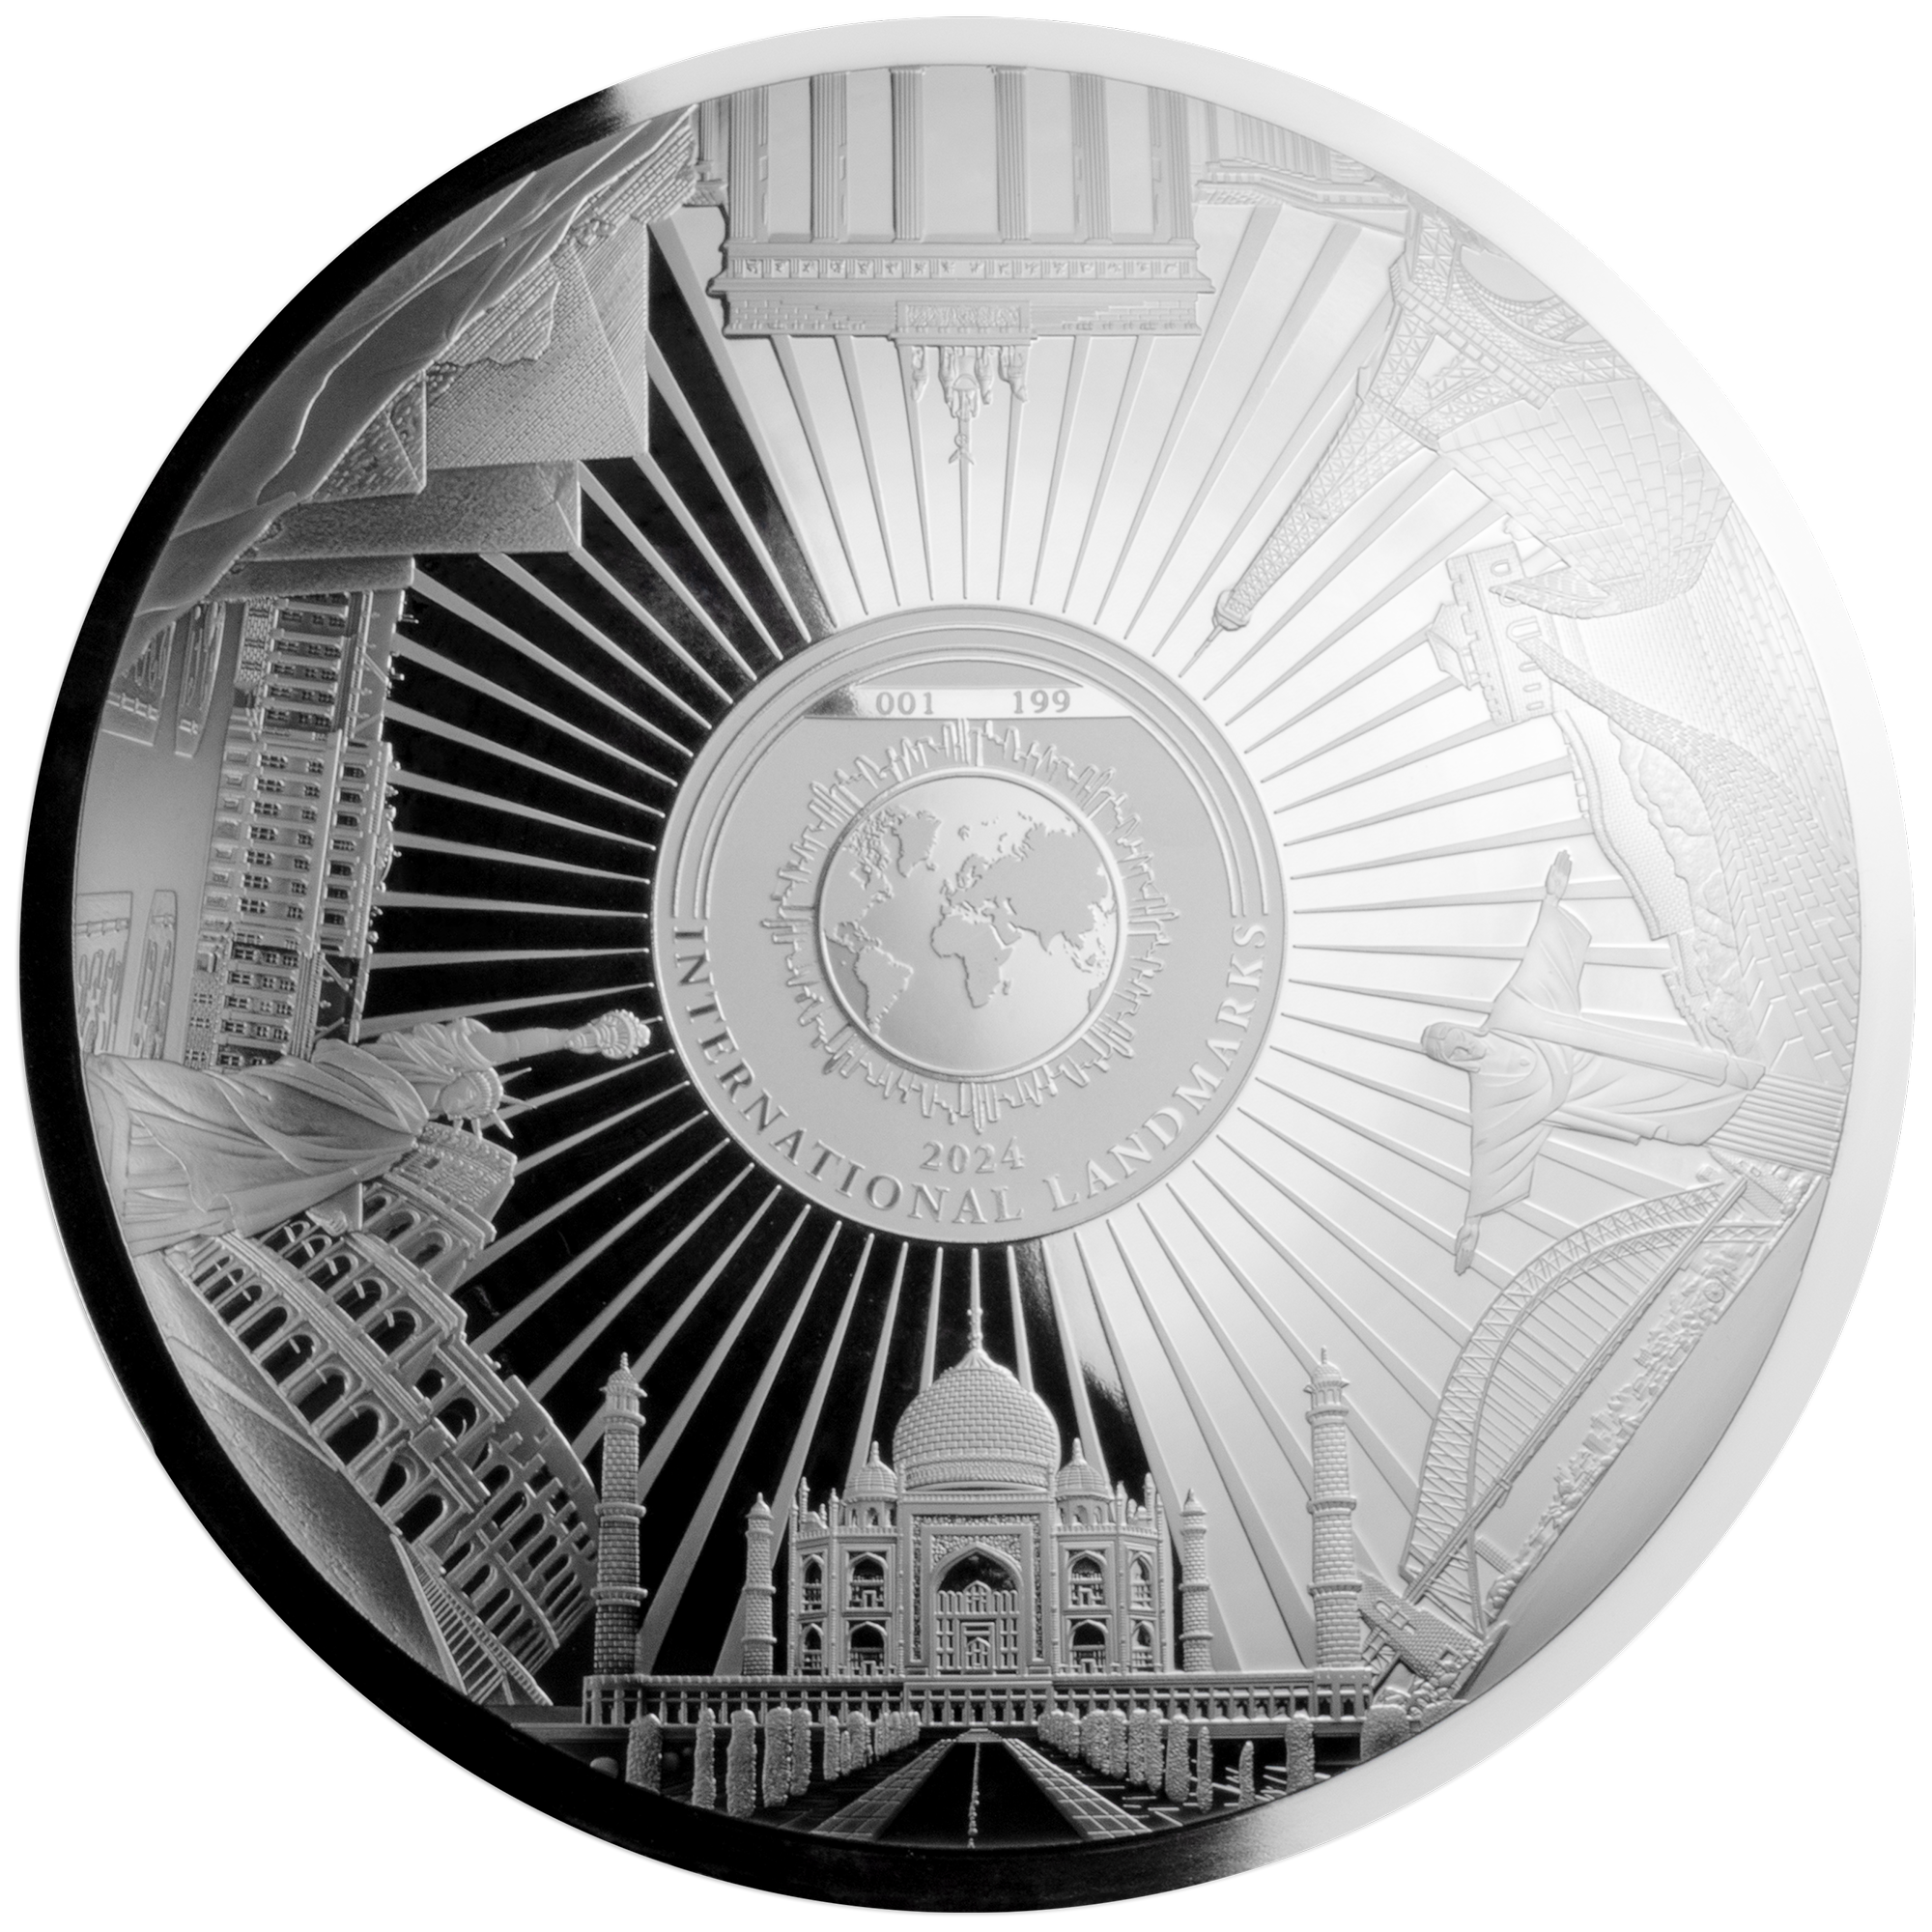 LANDMARK OF THE WORLD 1 Kg Kilo Silver Coin $25 Barbados 2024